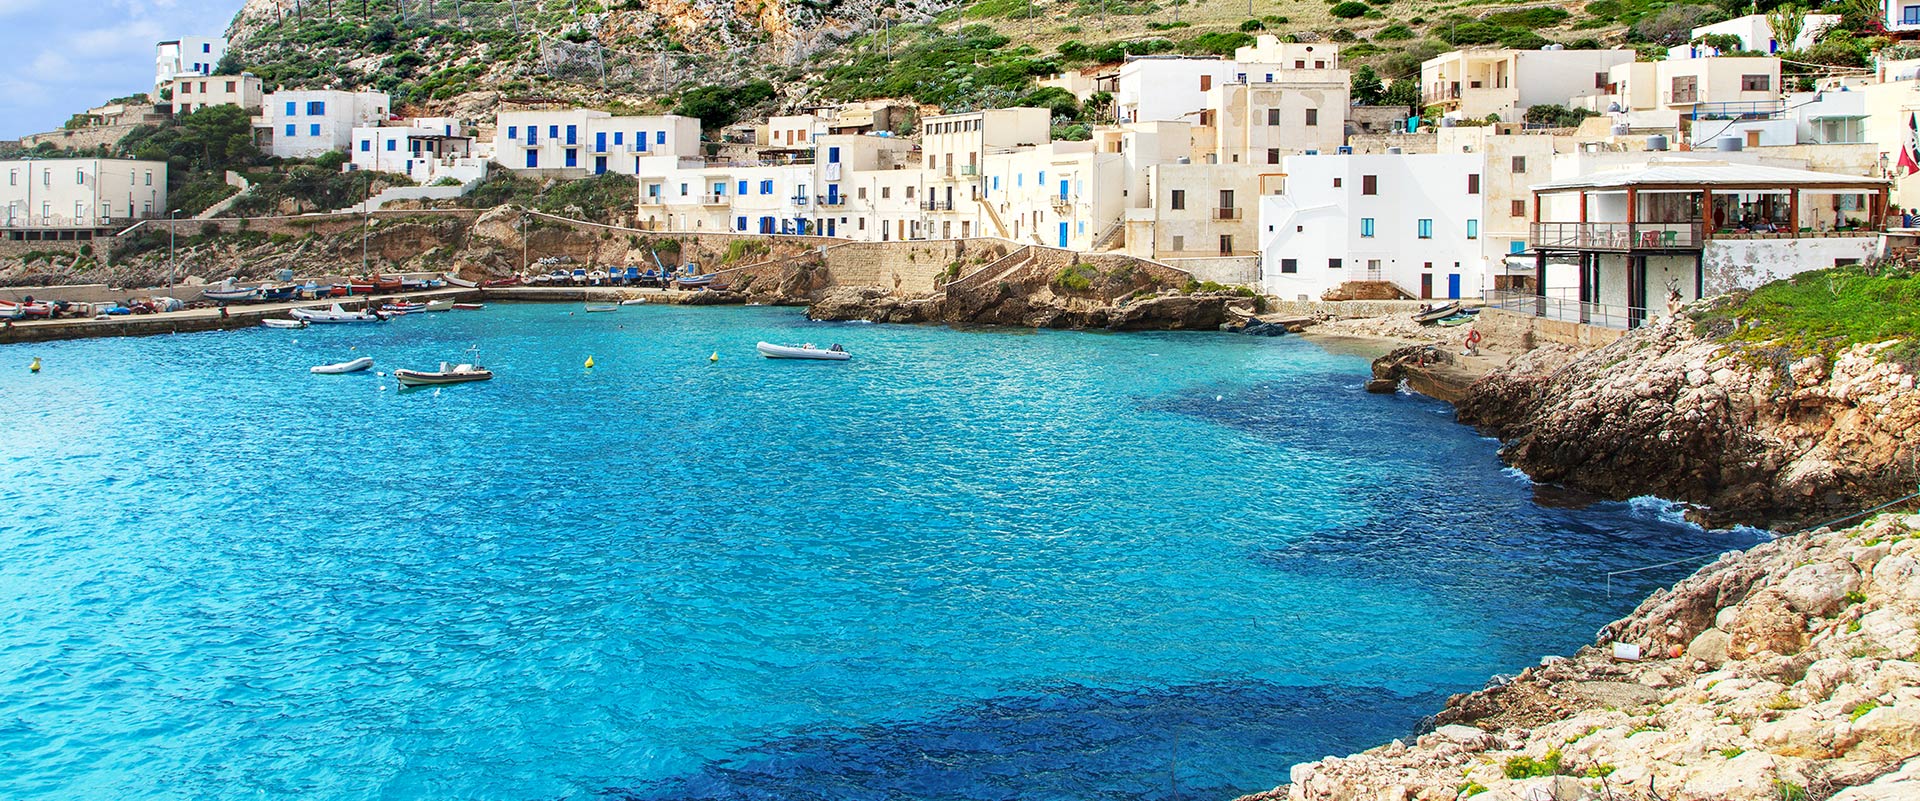 Aeolian Islands, Sicily: Sailing cruises